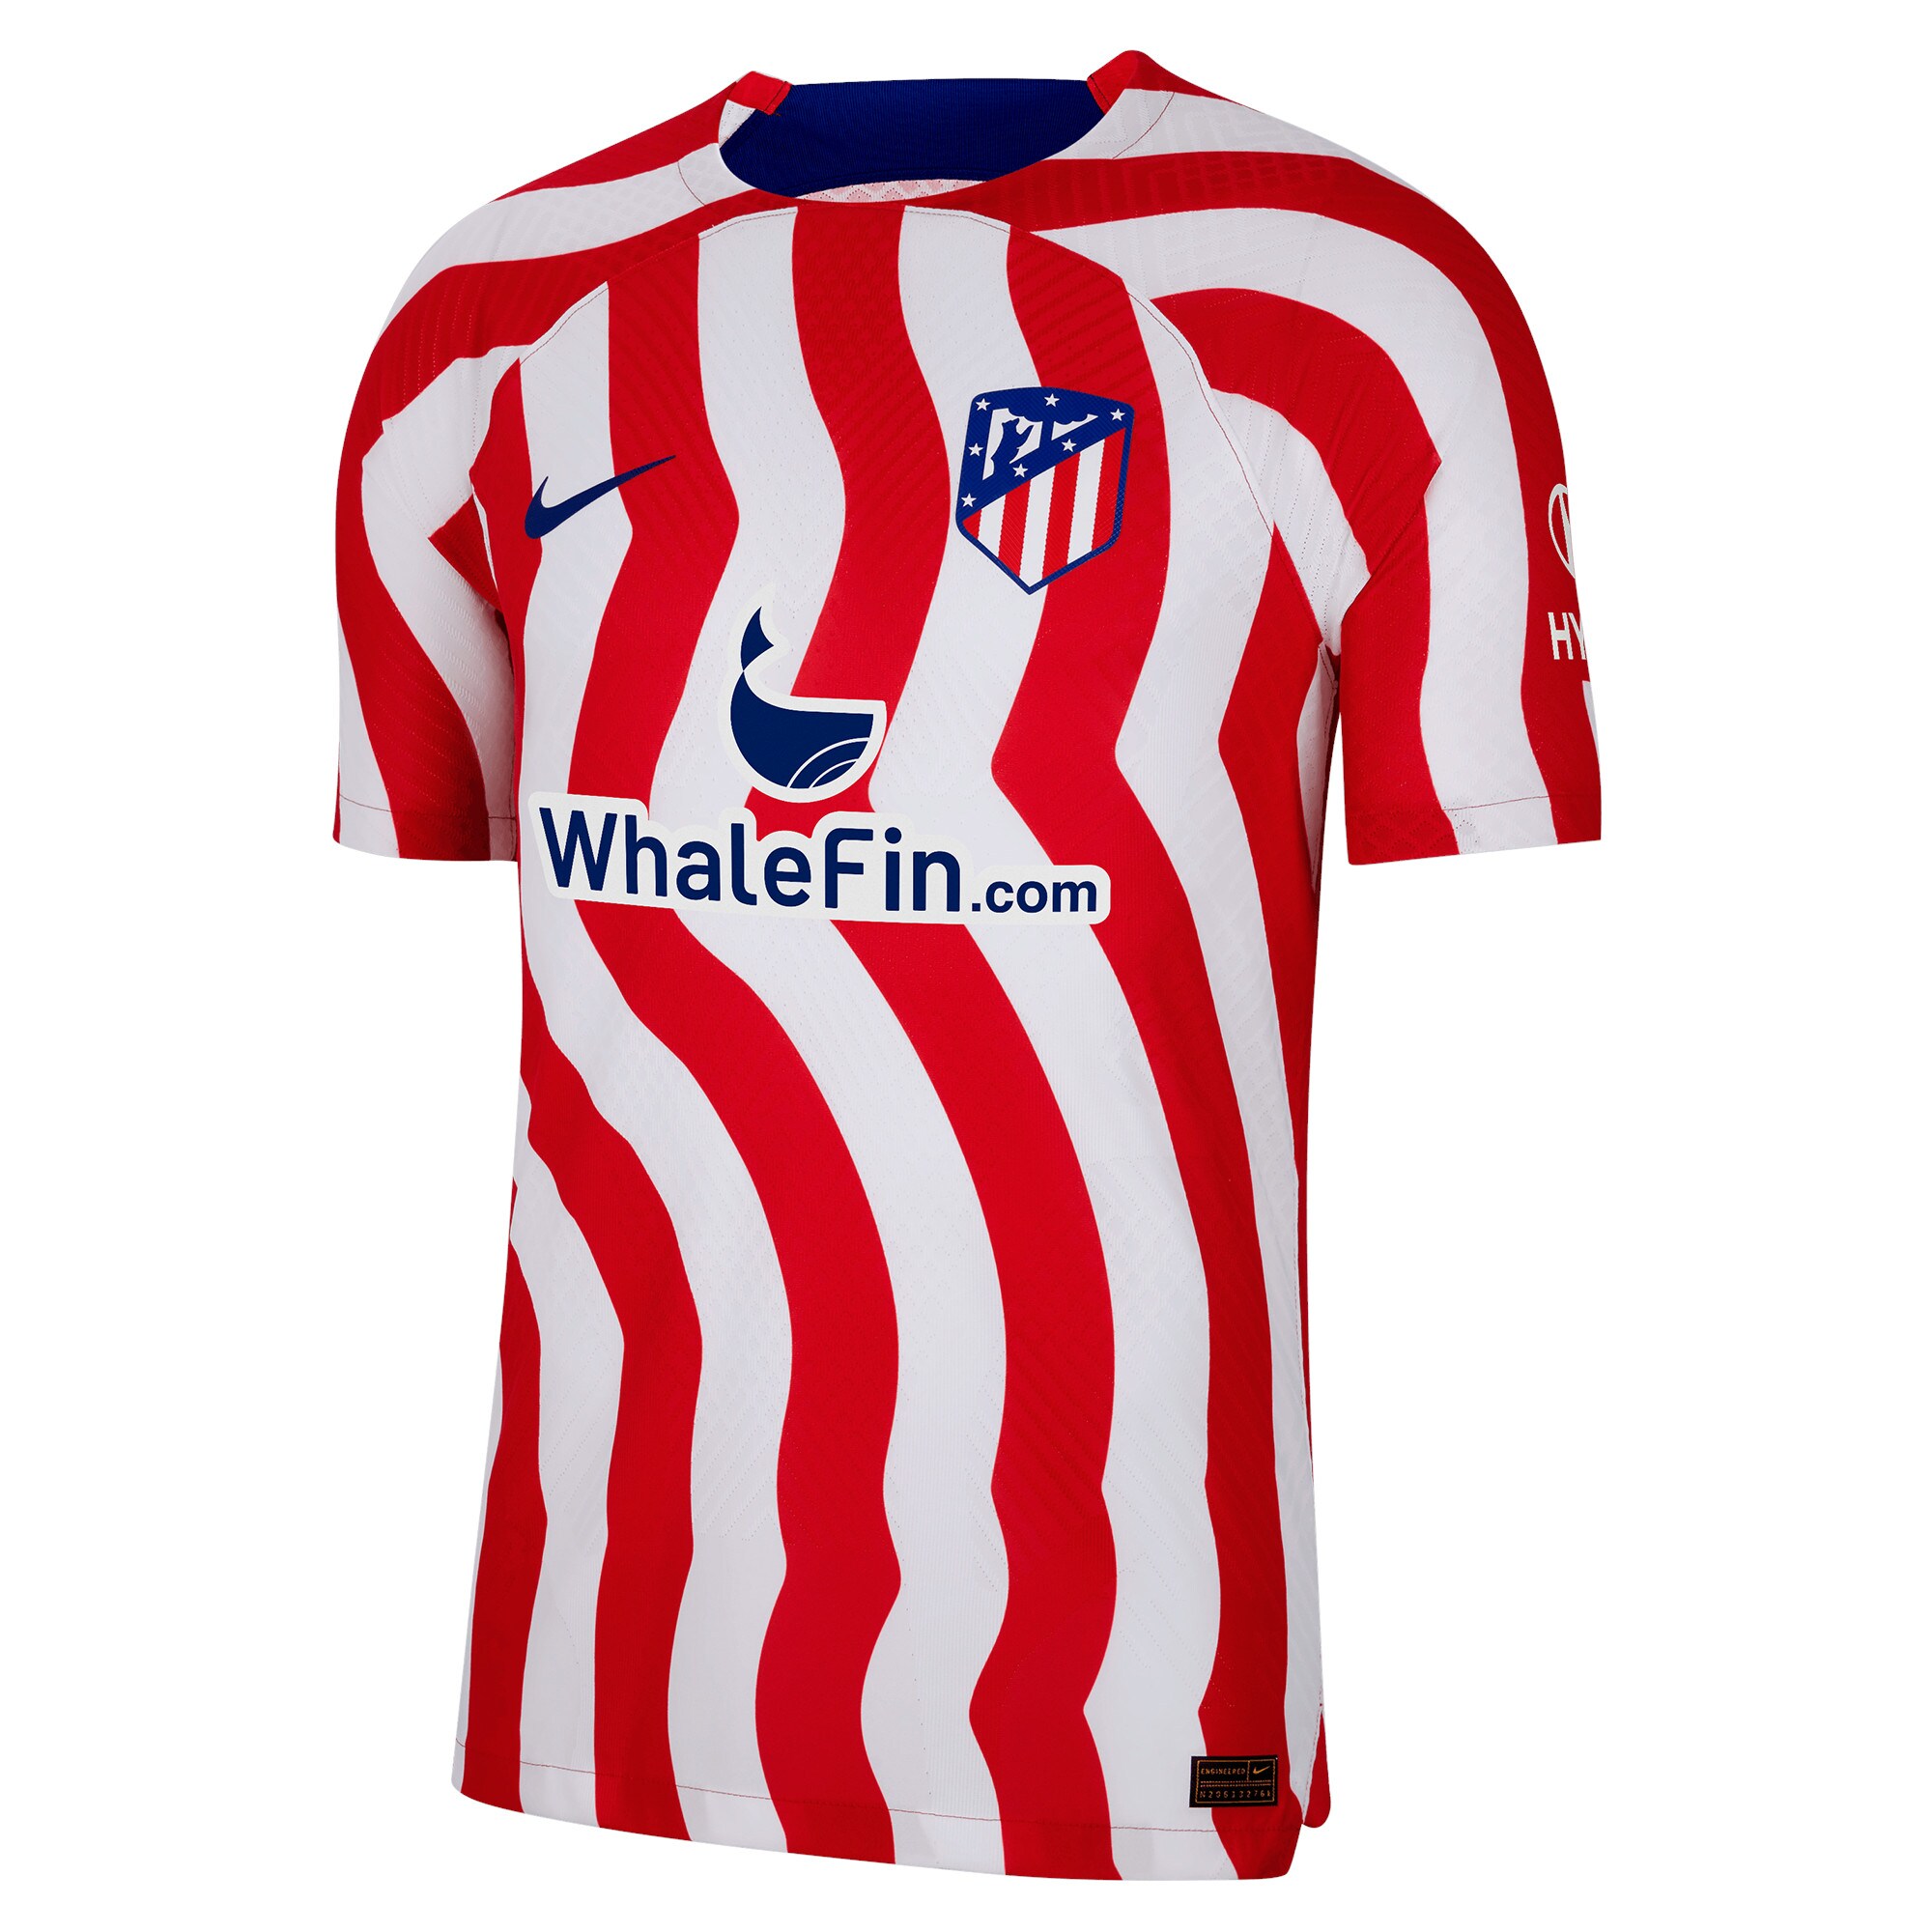 Atlético de Madrid Metropolitano Home Vapor Match Shirt 2022-23 with Renan Lodi 12 printing